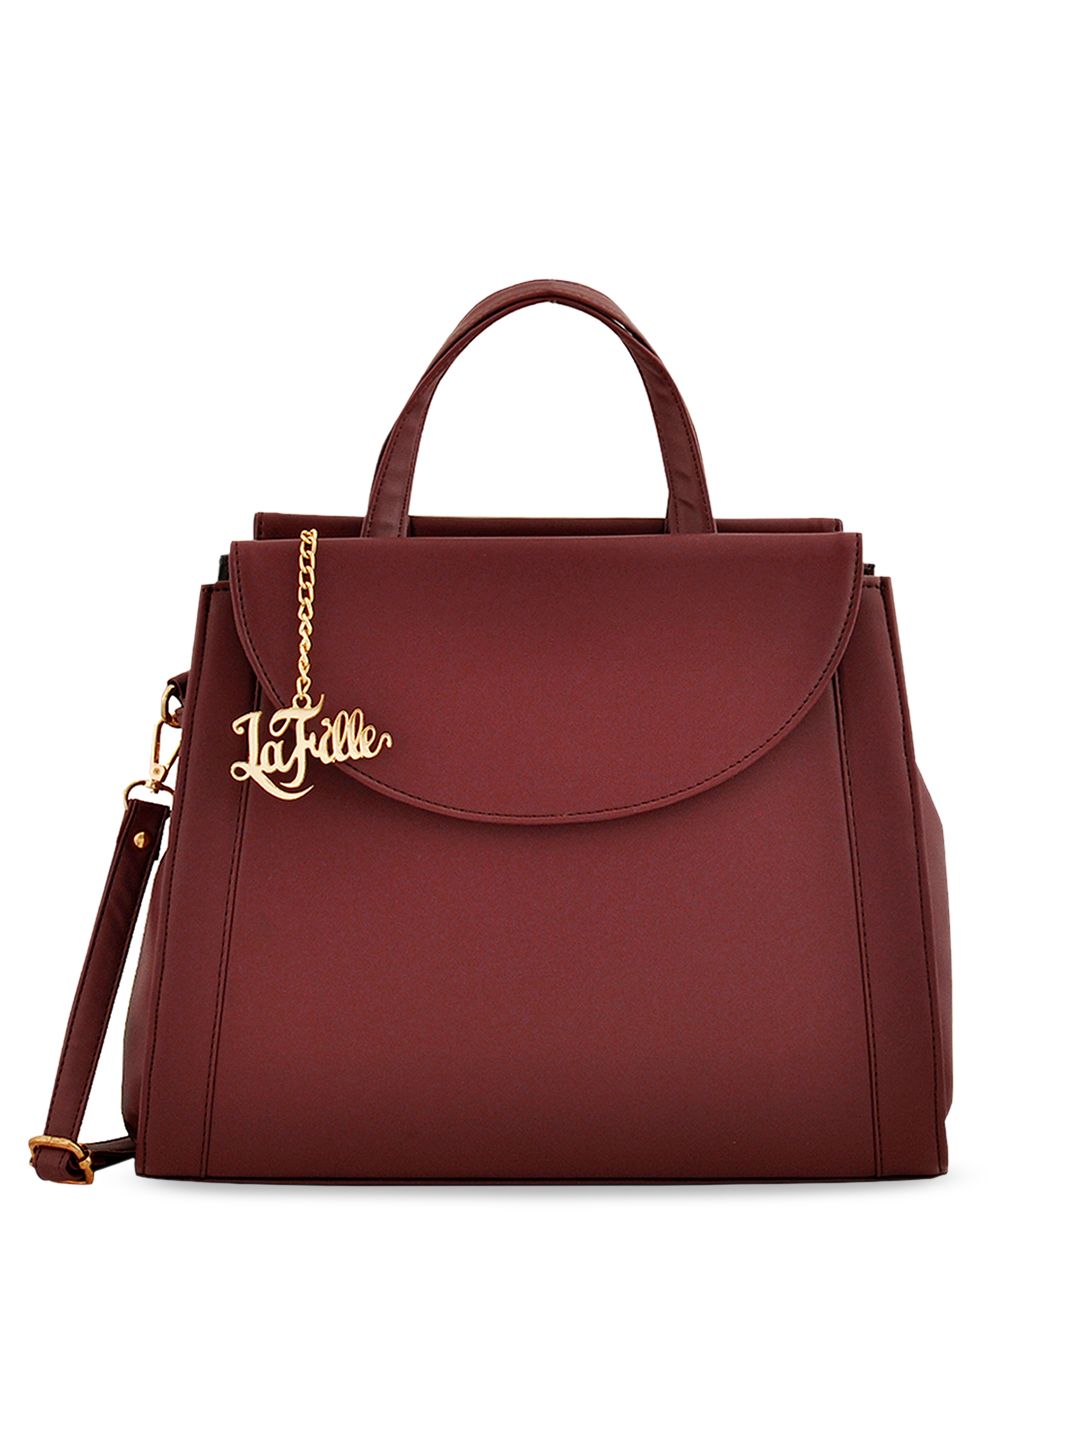 LaFille Burgundy Solid Handheld Bag Price in India